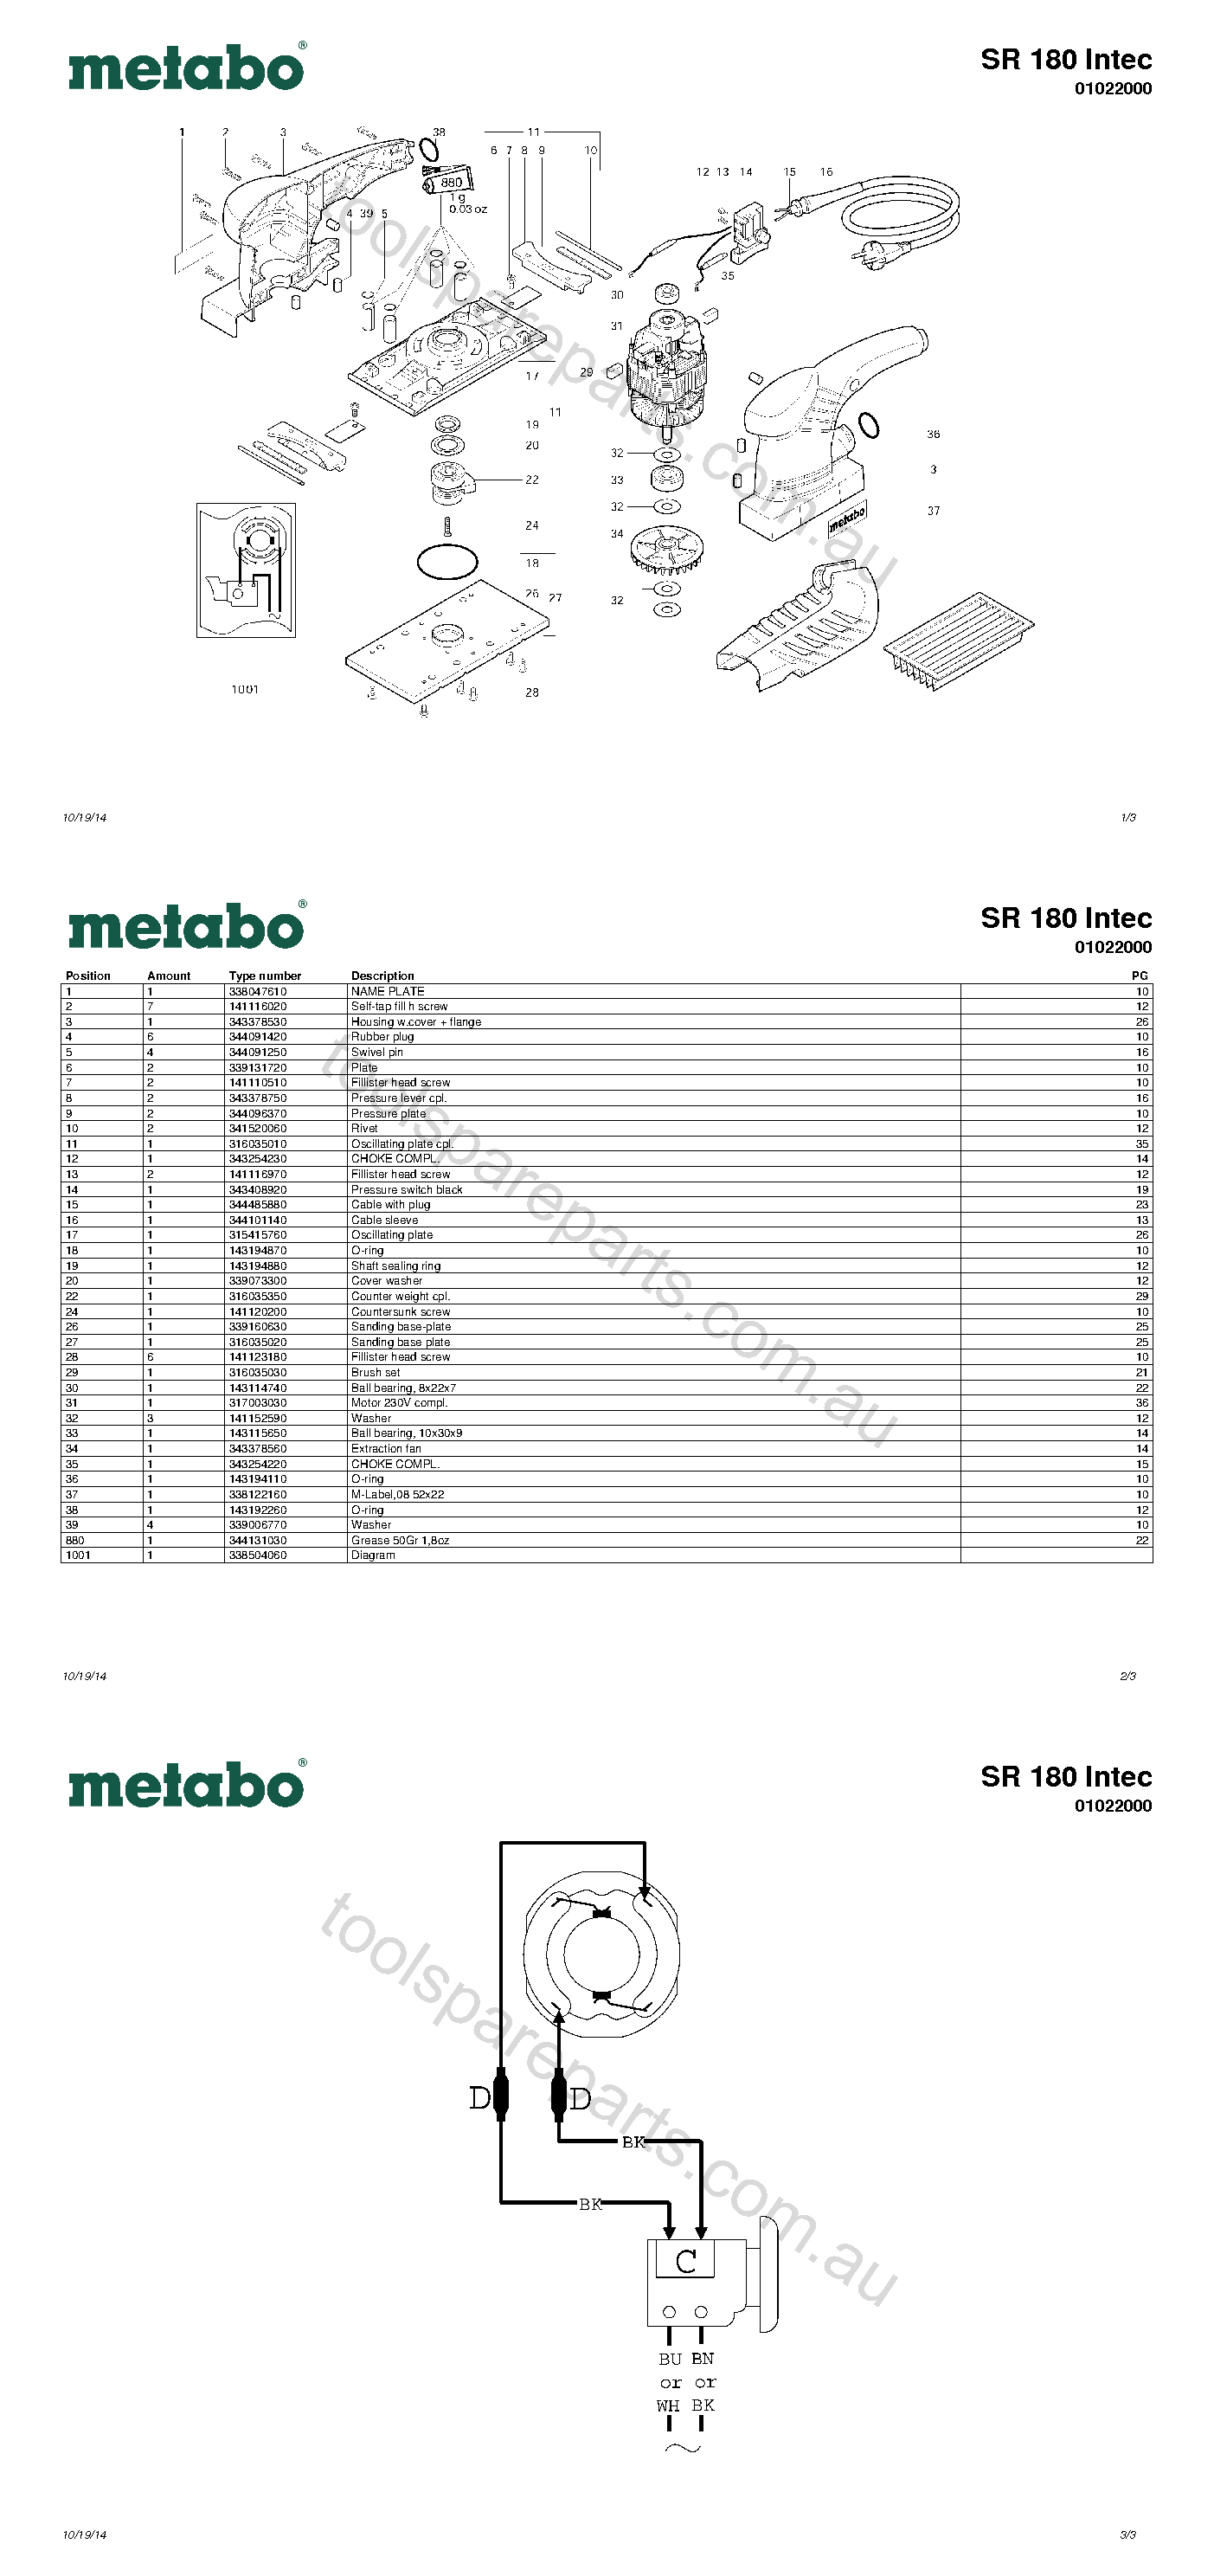 Metabo SR 180 Intec 01022000  Diagram 1